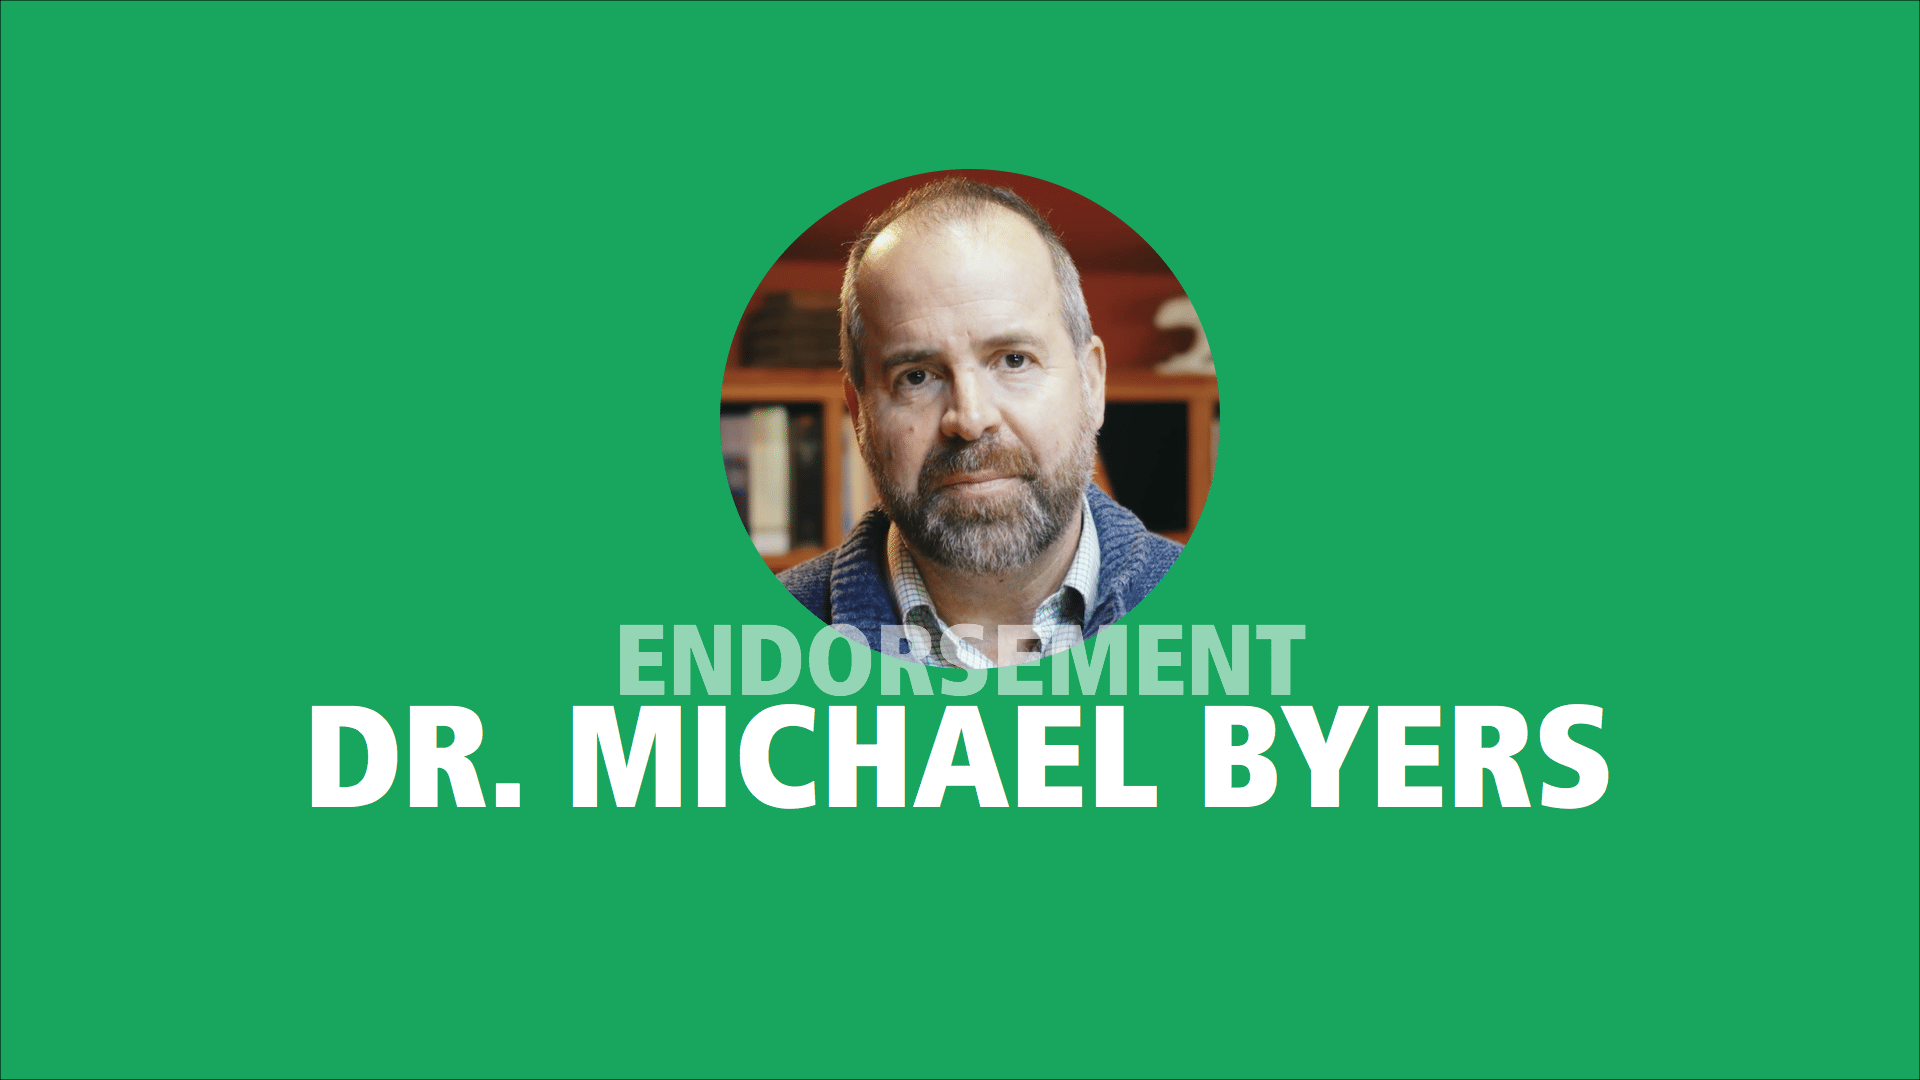 Dr. Michael Byers endorses Adam Olsen